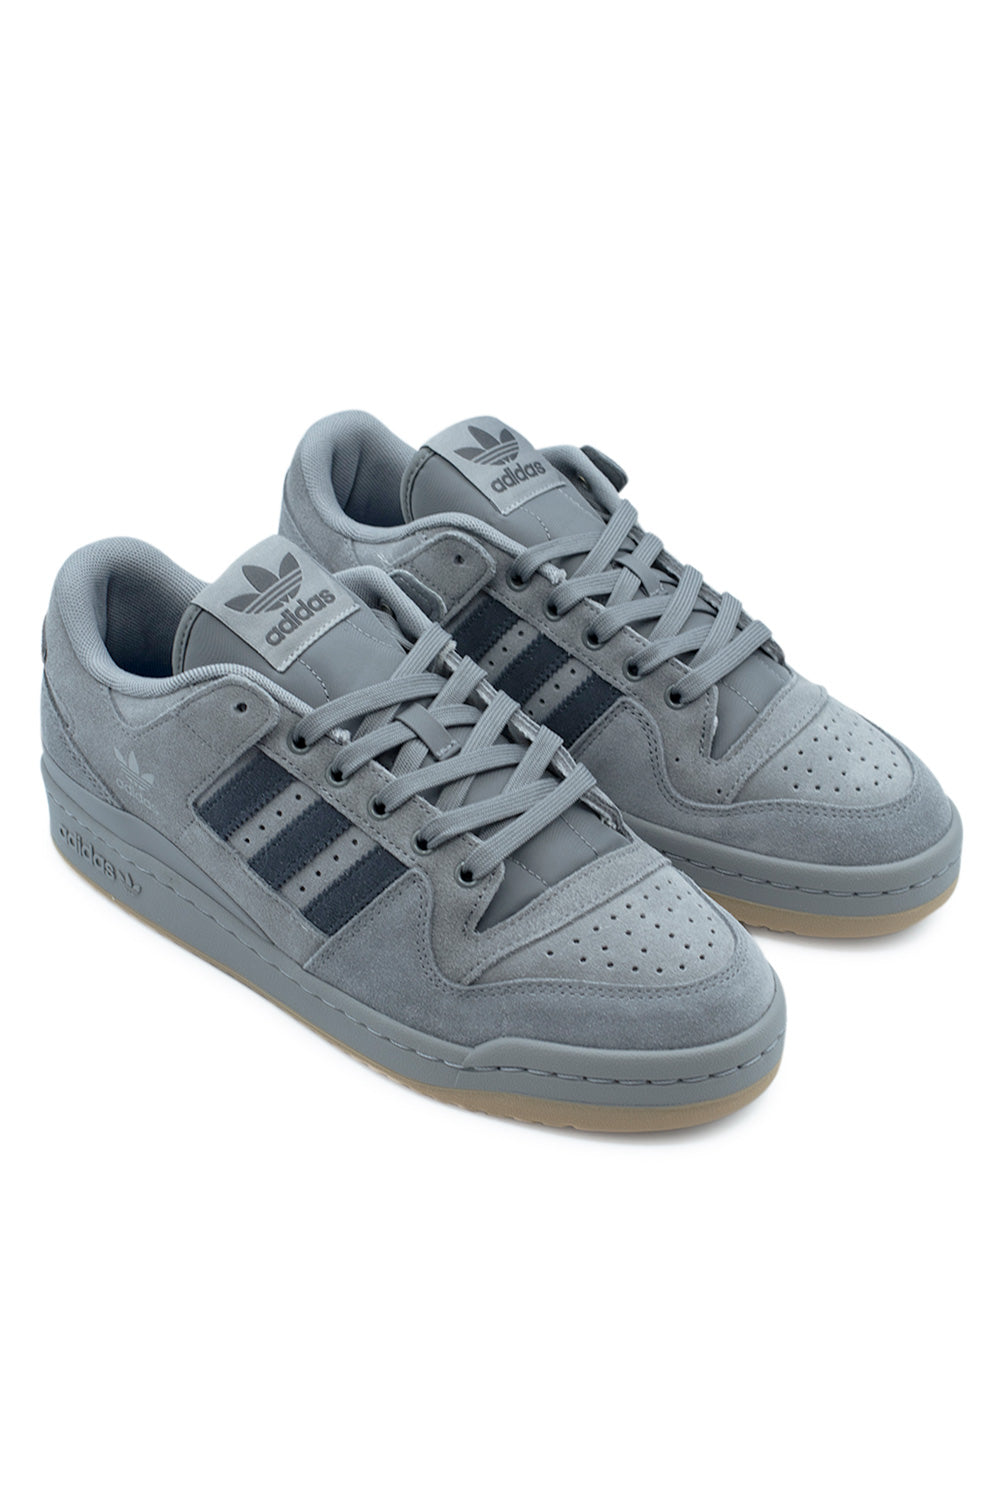 Adidas Forum 84 Low ADV Shoe Grey Four / Carbon / Grey Three - BONKERS